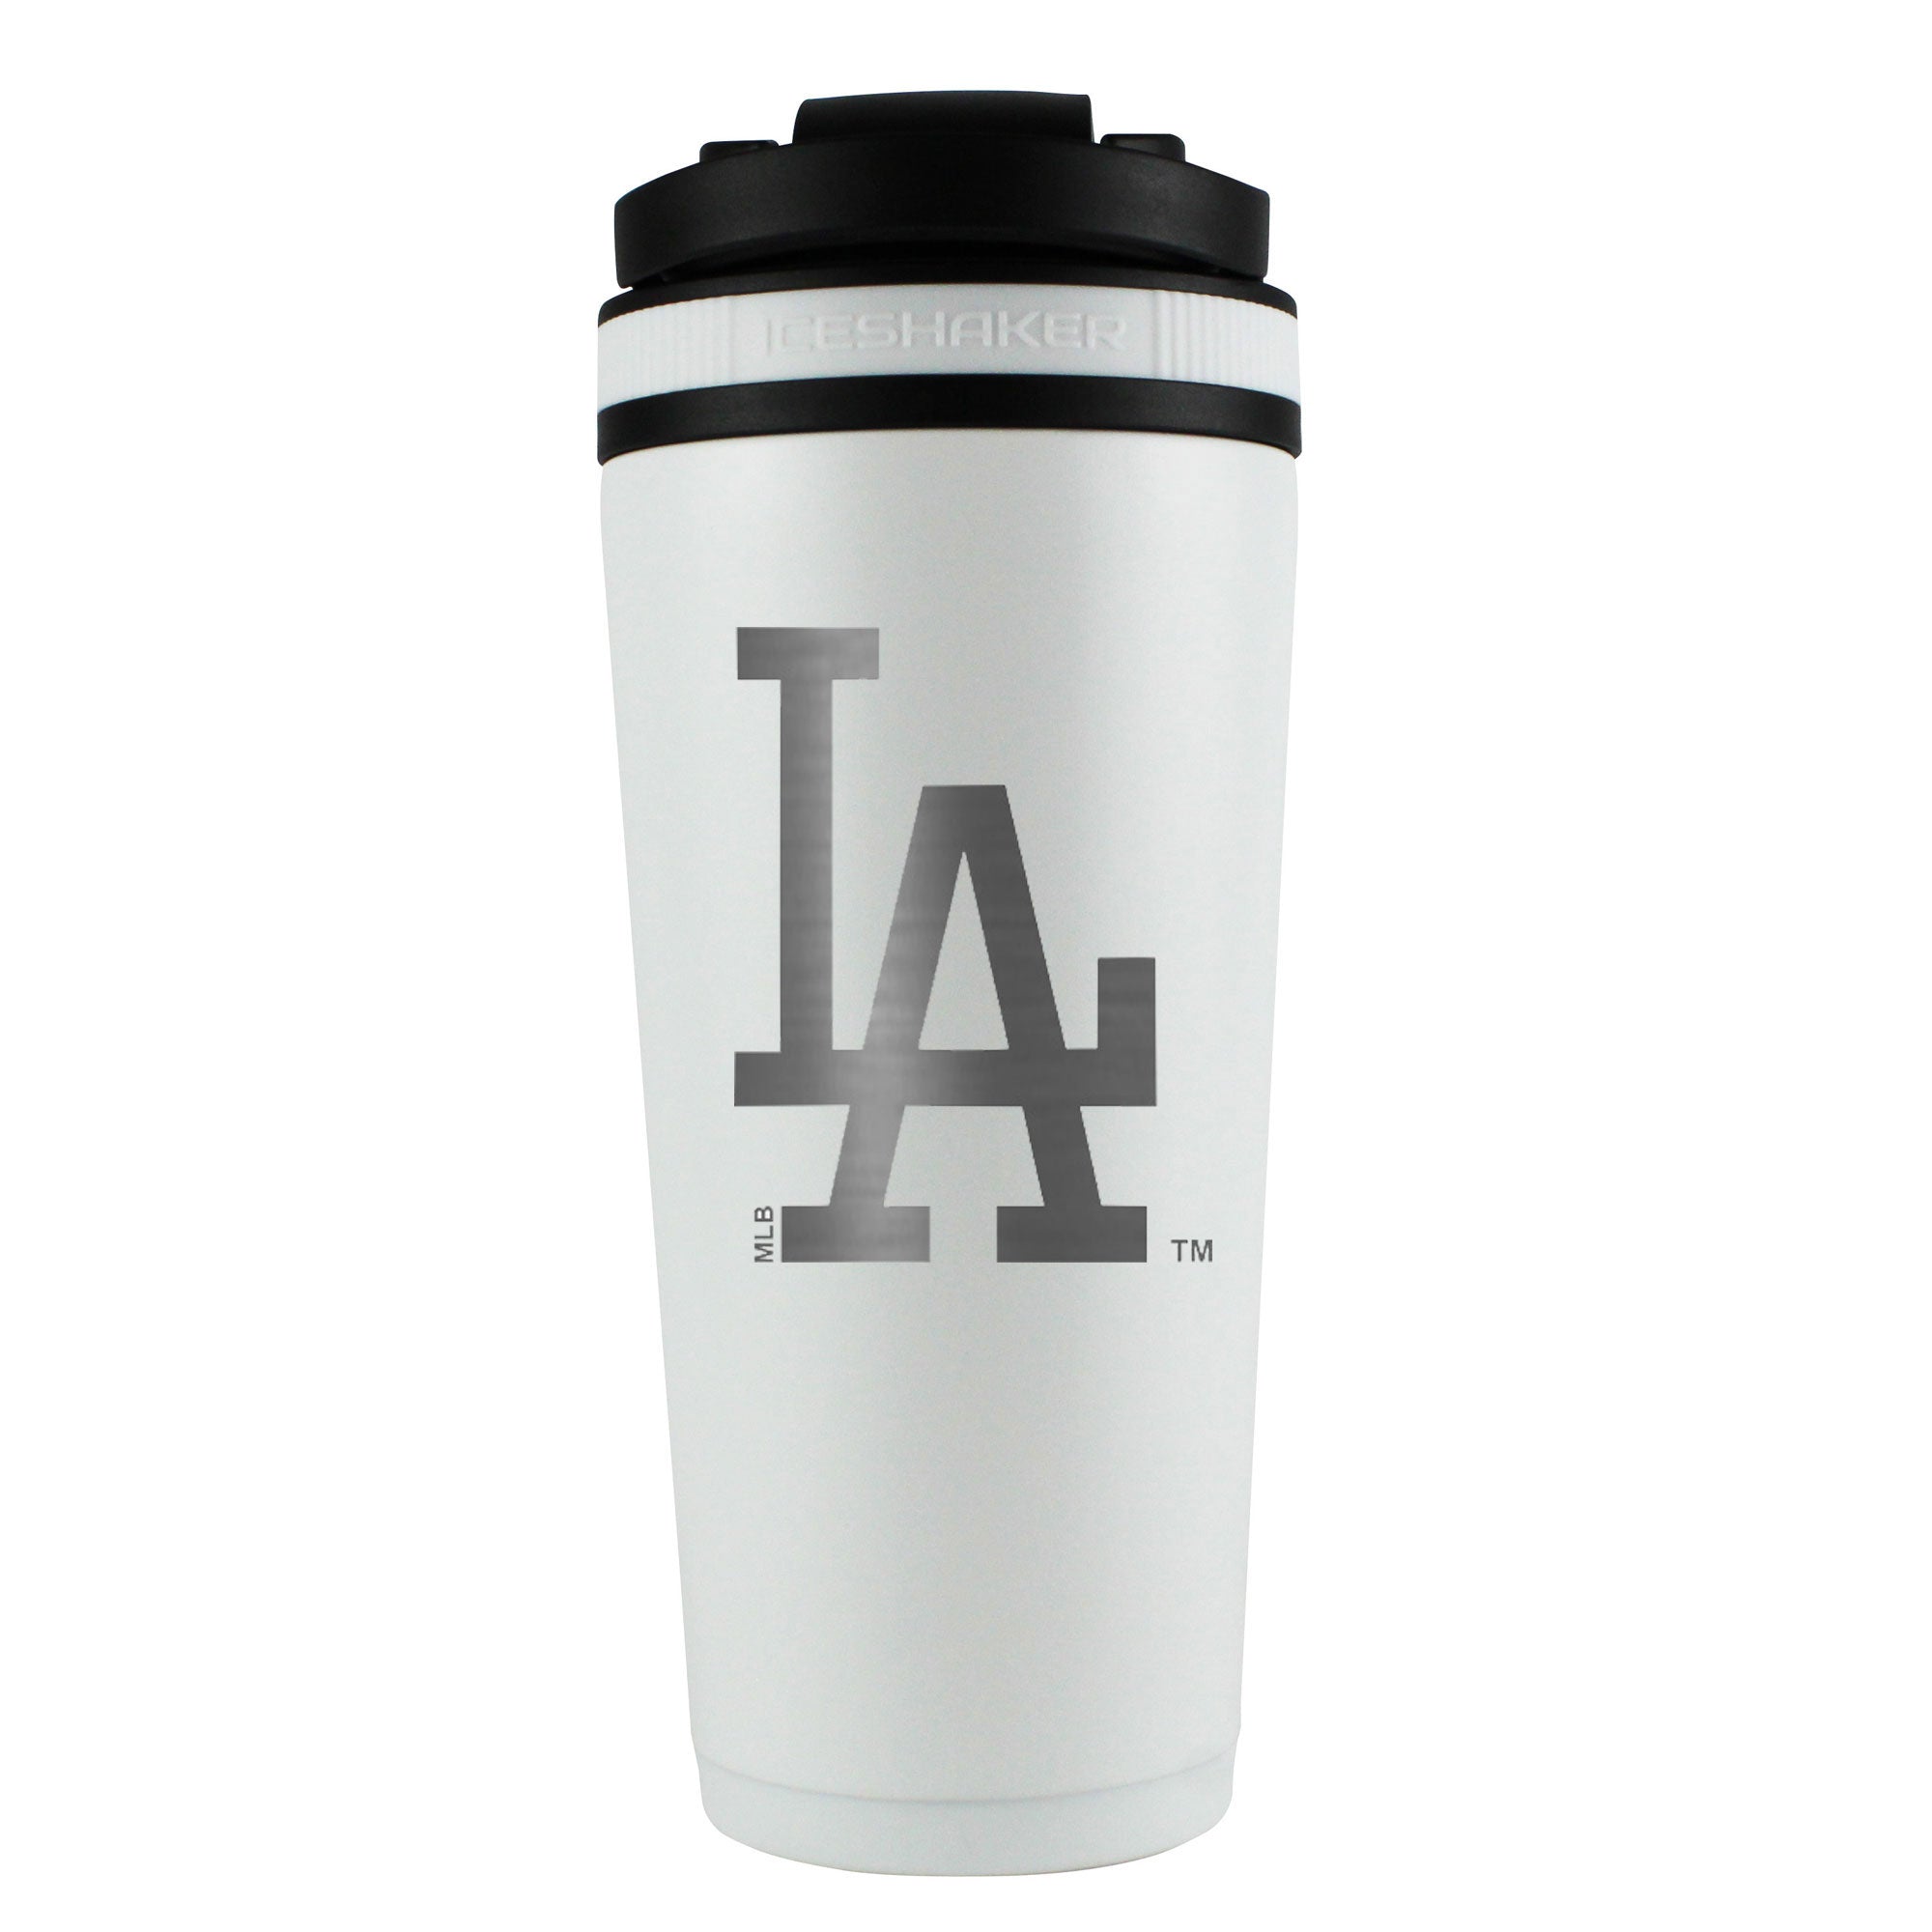 Officially Licensed Los Angeles Dodgers 26oz Ice Shaker (Alternate Logo) - White